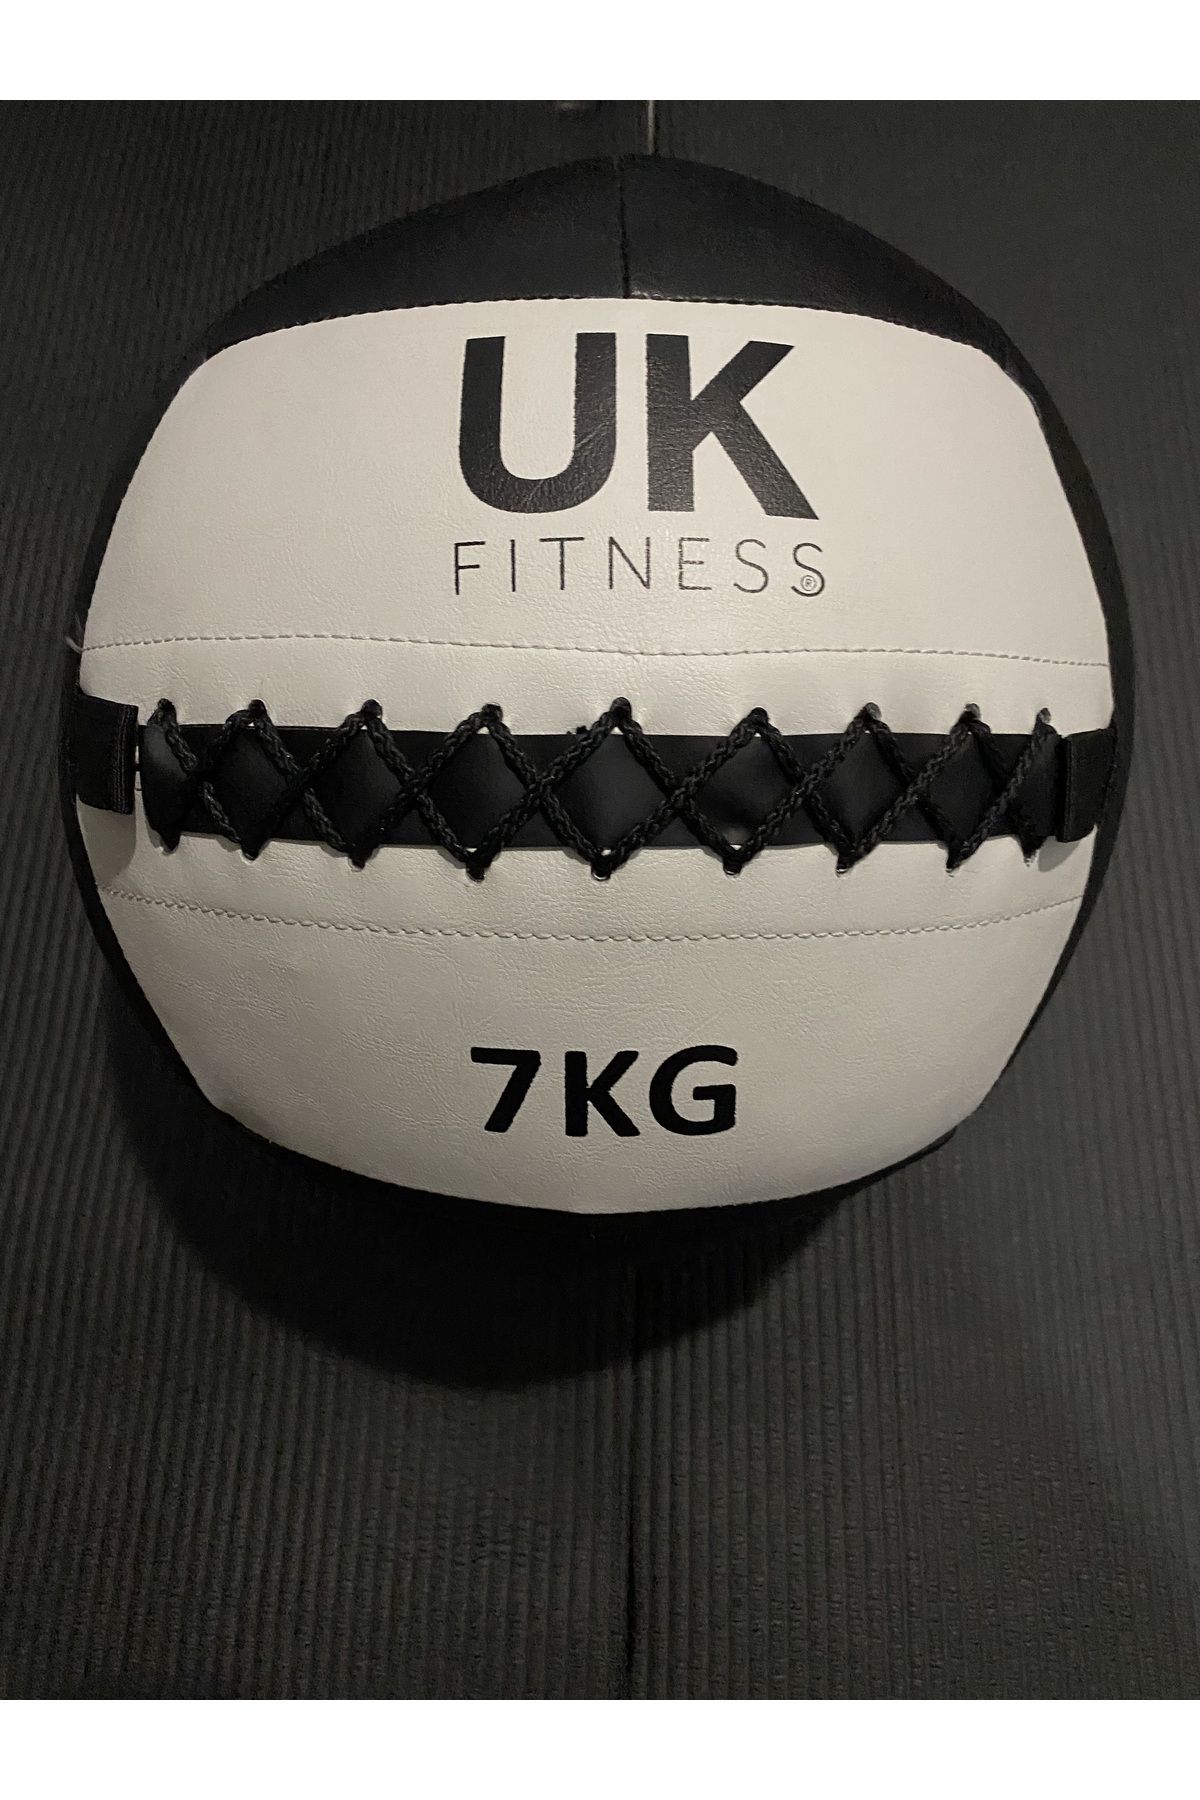 UK FİTNESS Uk Fitness Crossfit Gym Deri Sağlık Topu 7 Kg Pro.